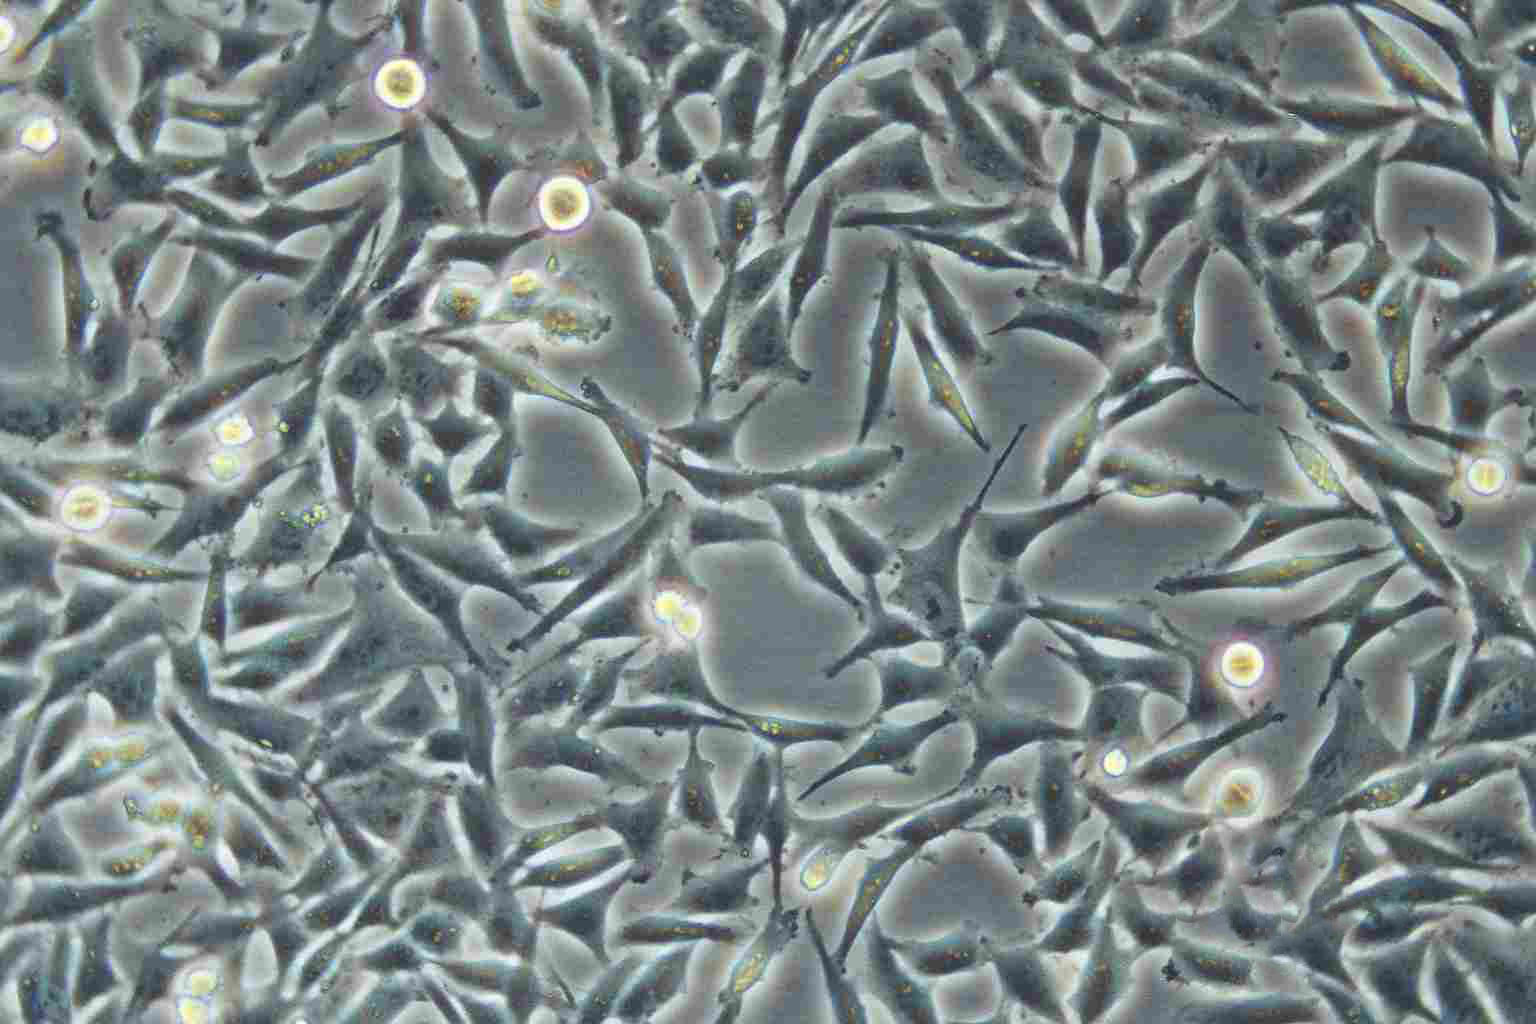 Sp2/0-Ag14 cell line小鼠骨髓瘤细胞系,Sp2/0-Ag14 cell line